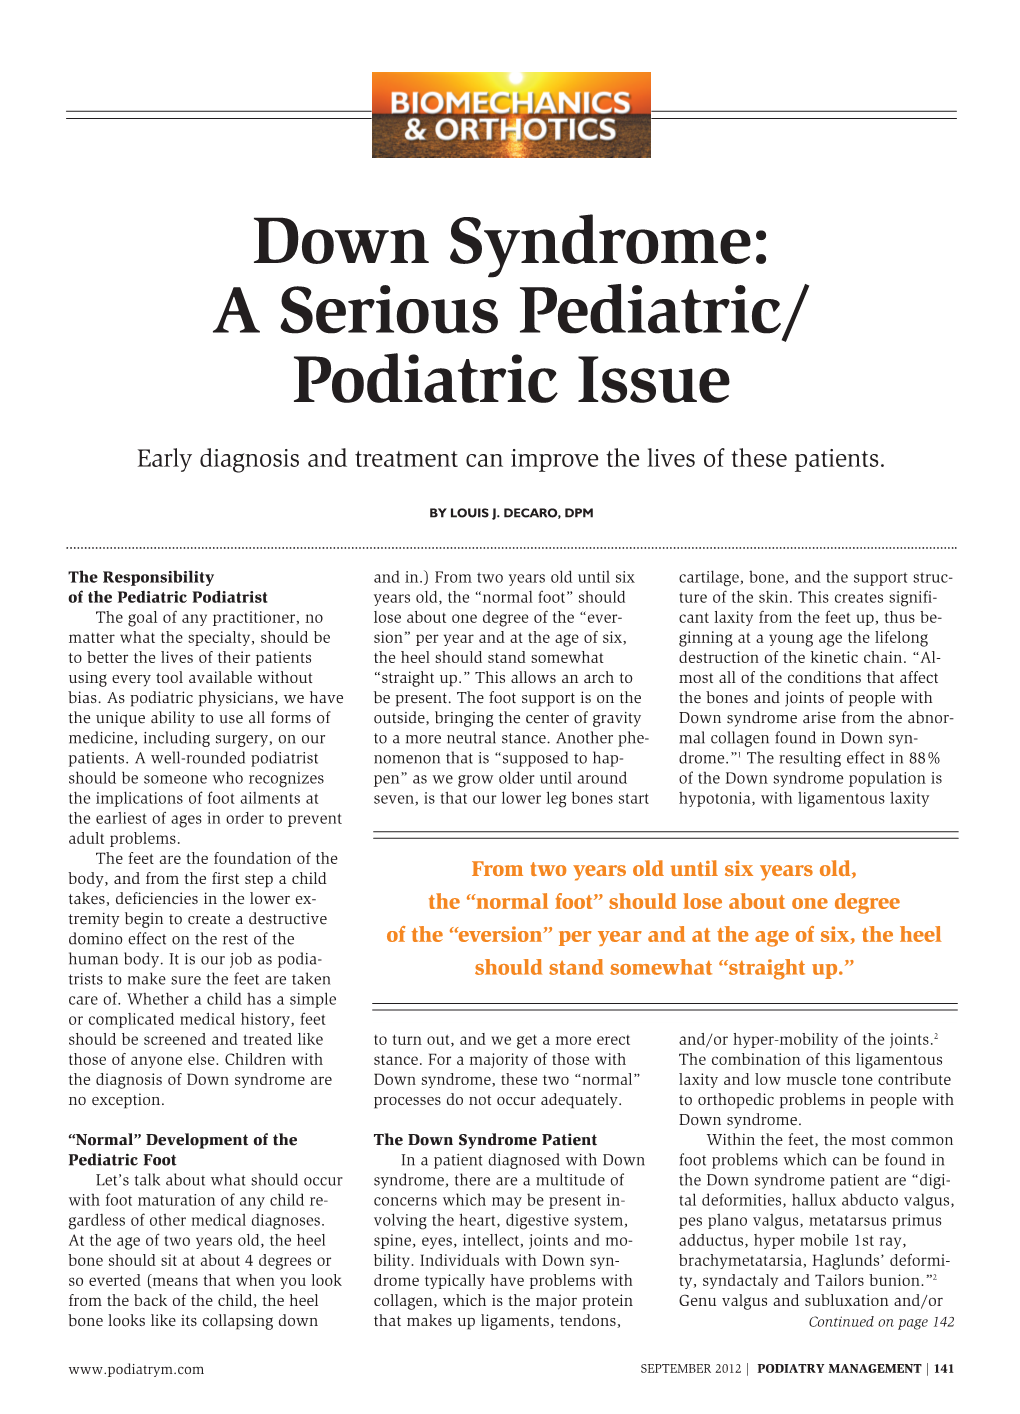 Down Syndrome: a Serious Pediatric/ Podiatric Issue